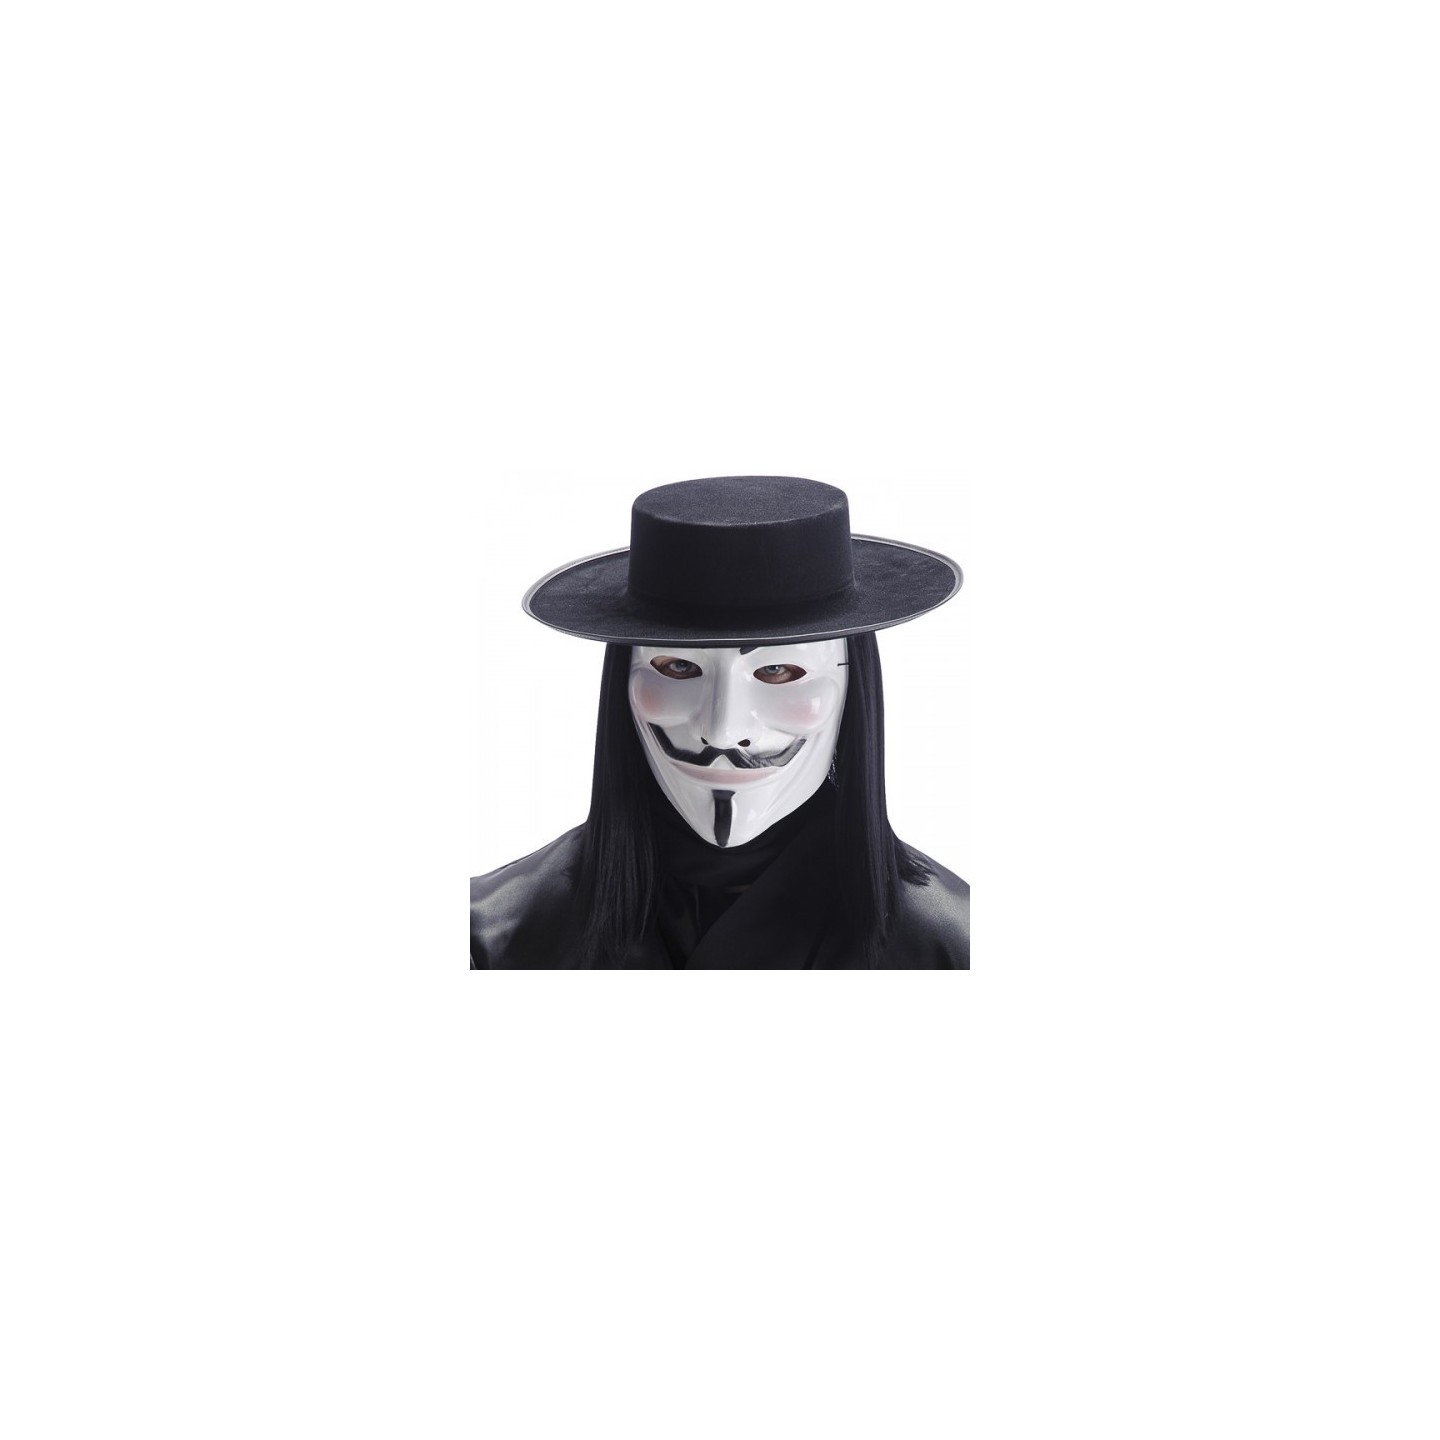 Haiku zoom Bijdrage Vendetta Masker / Anonymous Masker | Jokershop.be - Carnavalsmaskers